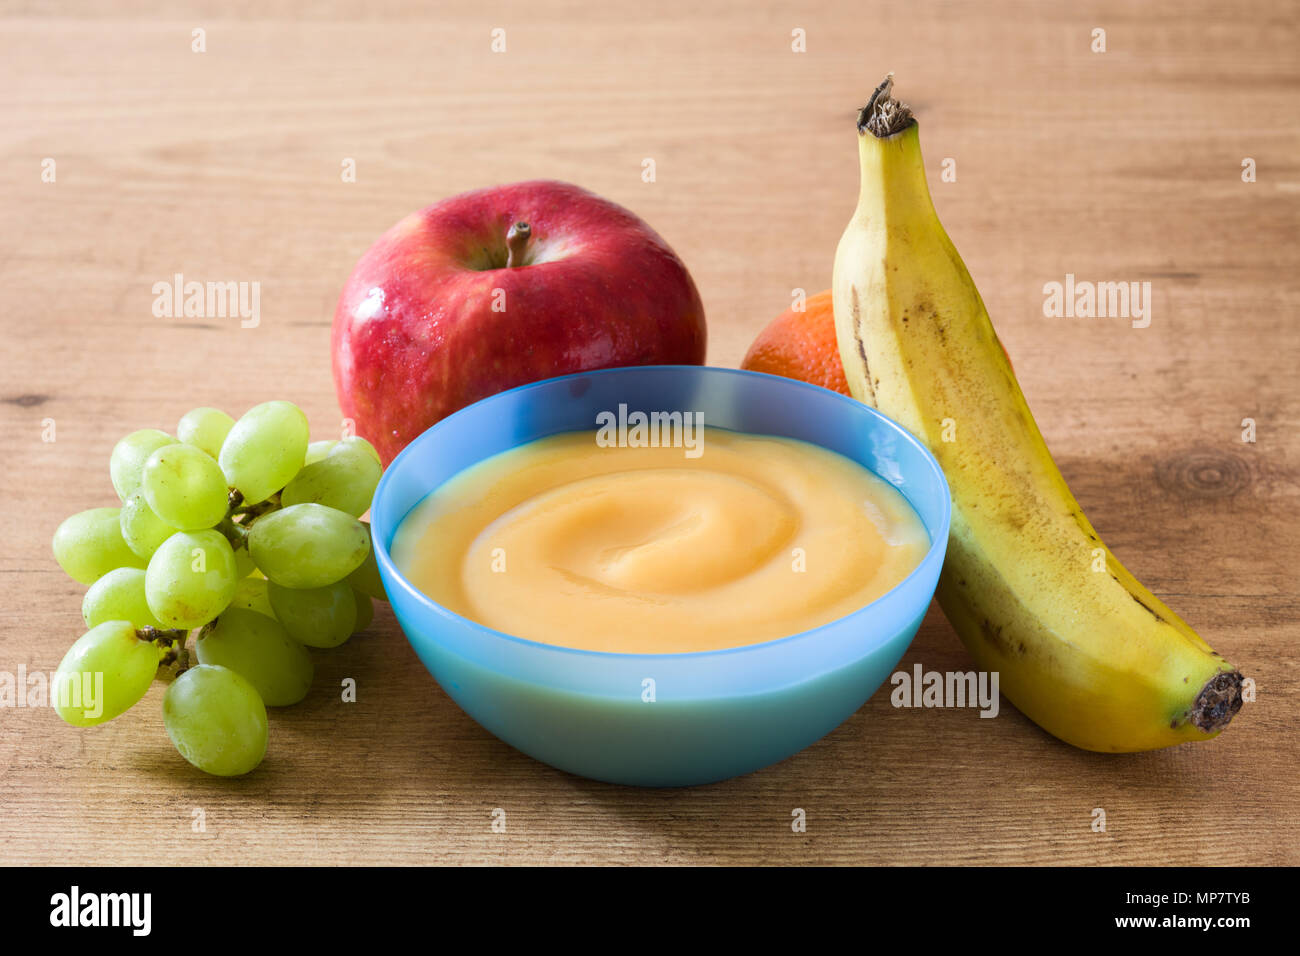 Comida para bebés: colorido plato de puré de frutas sobre la mesa de madera Foto de stock